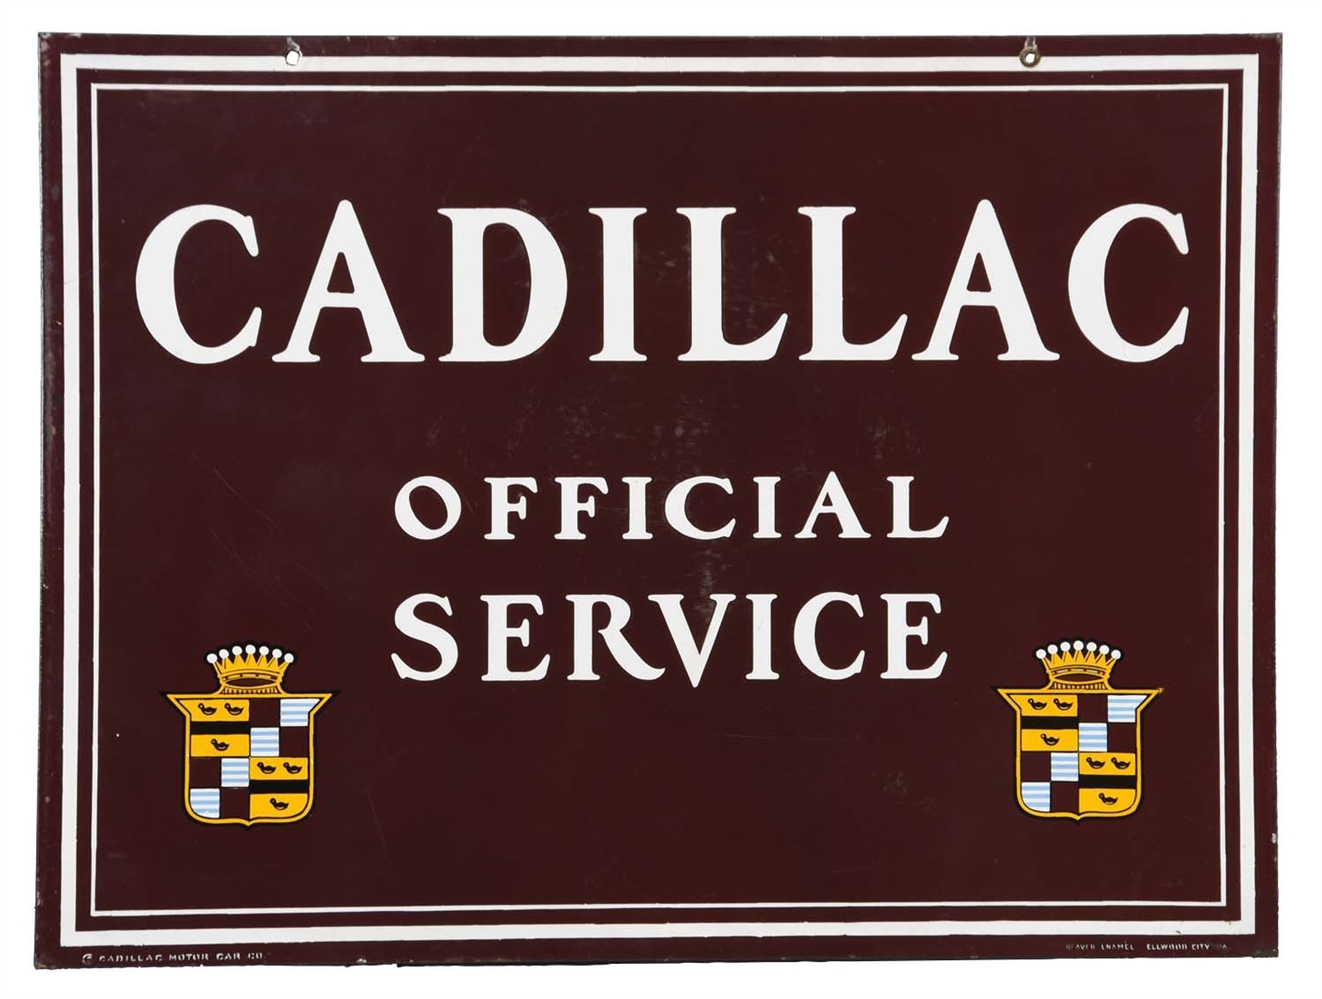 CADILLAC OFFICIAL SERVICE W/CREST LOGOS PORCELAIN SIGN.     